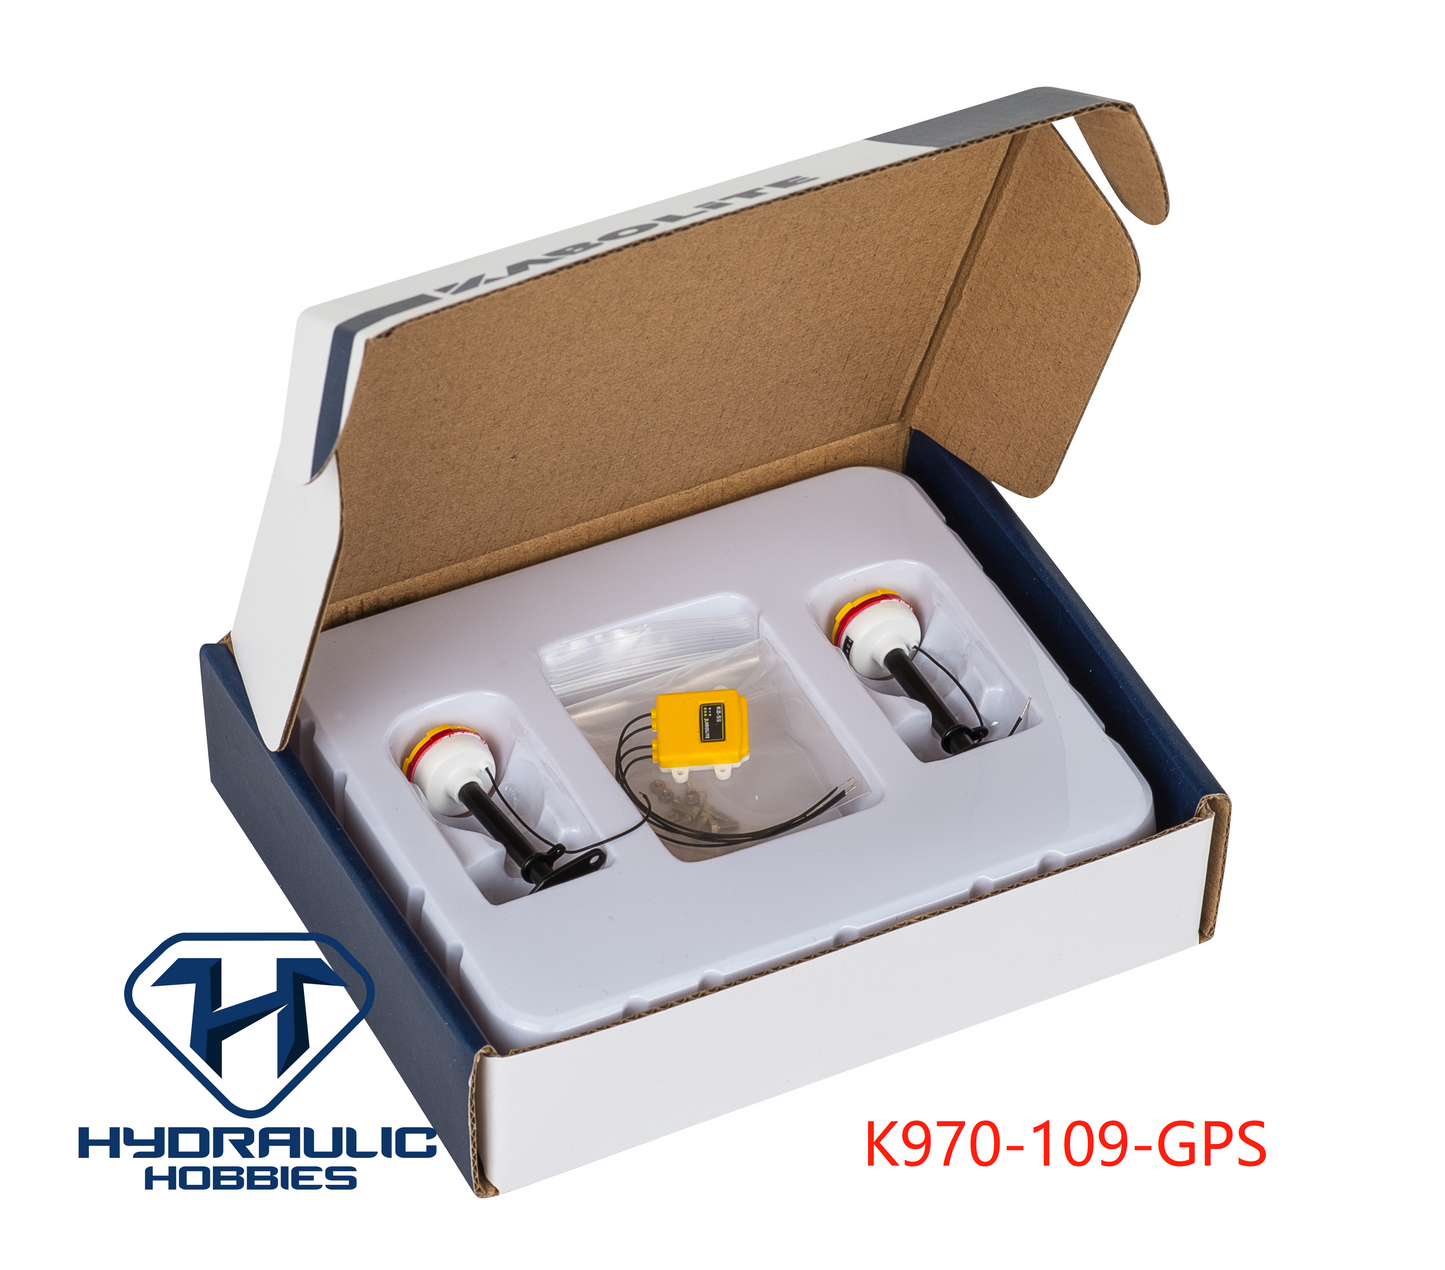 Kabolite K970-109 GPS